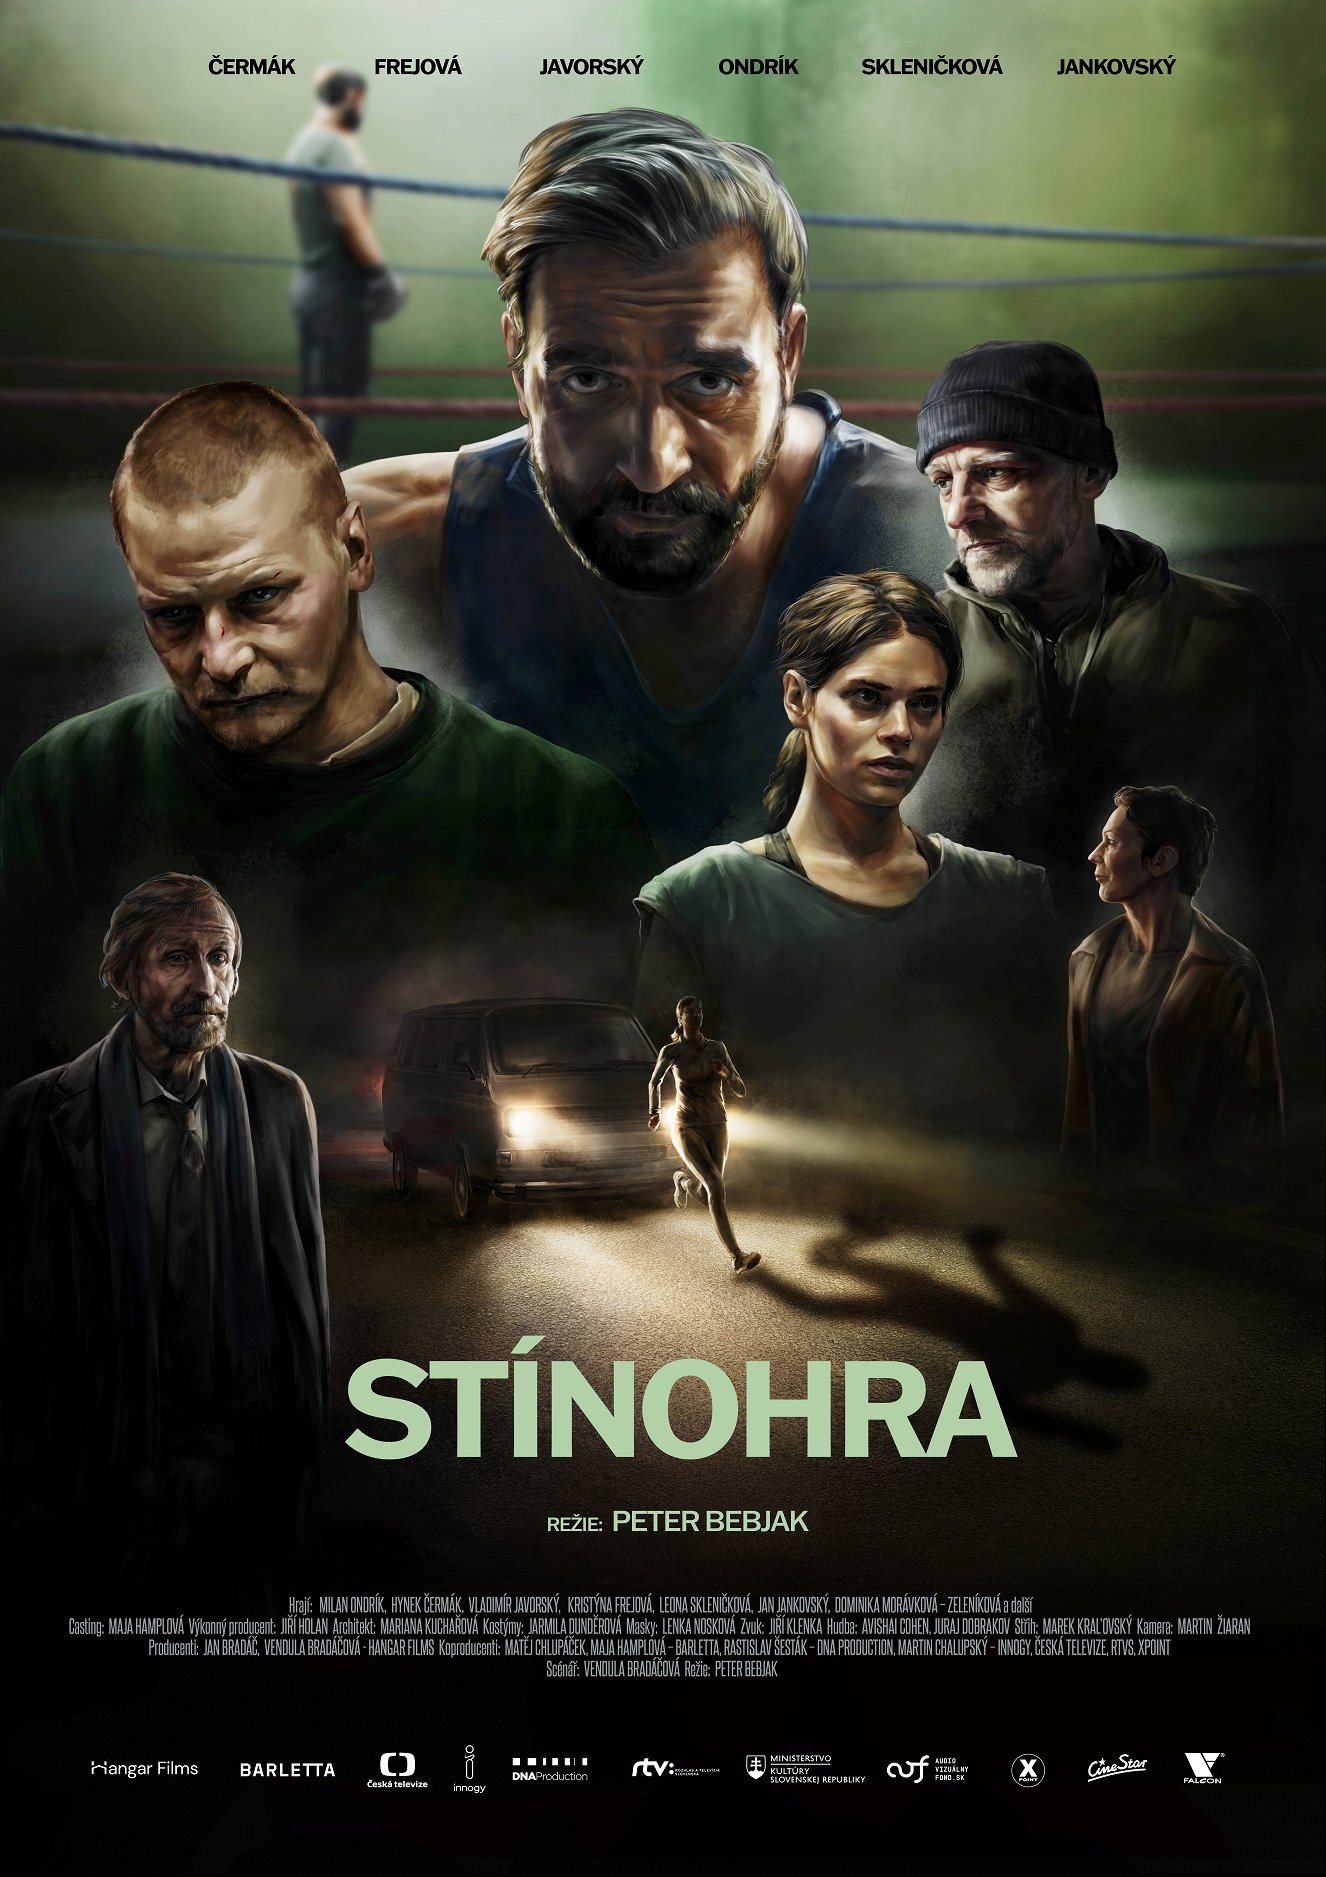 Stiahni si Filmy CZ/SK dabing  Stinohra / Tienohra (2022)(CZ)[WebRip] = CSFD 61%